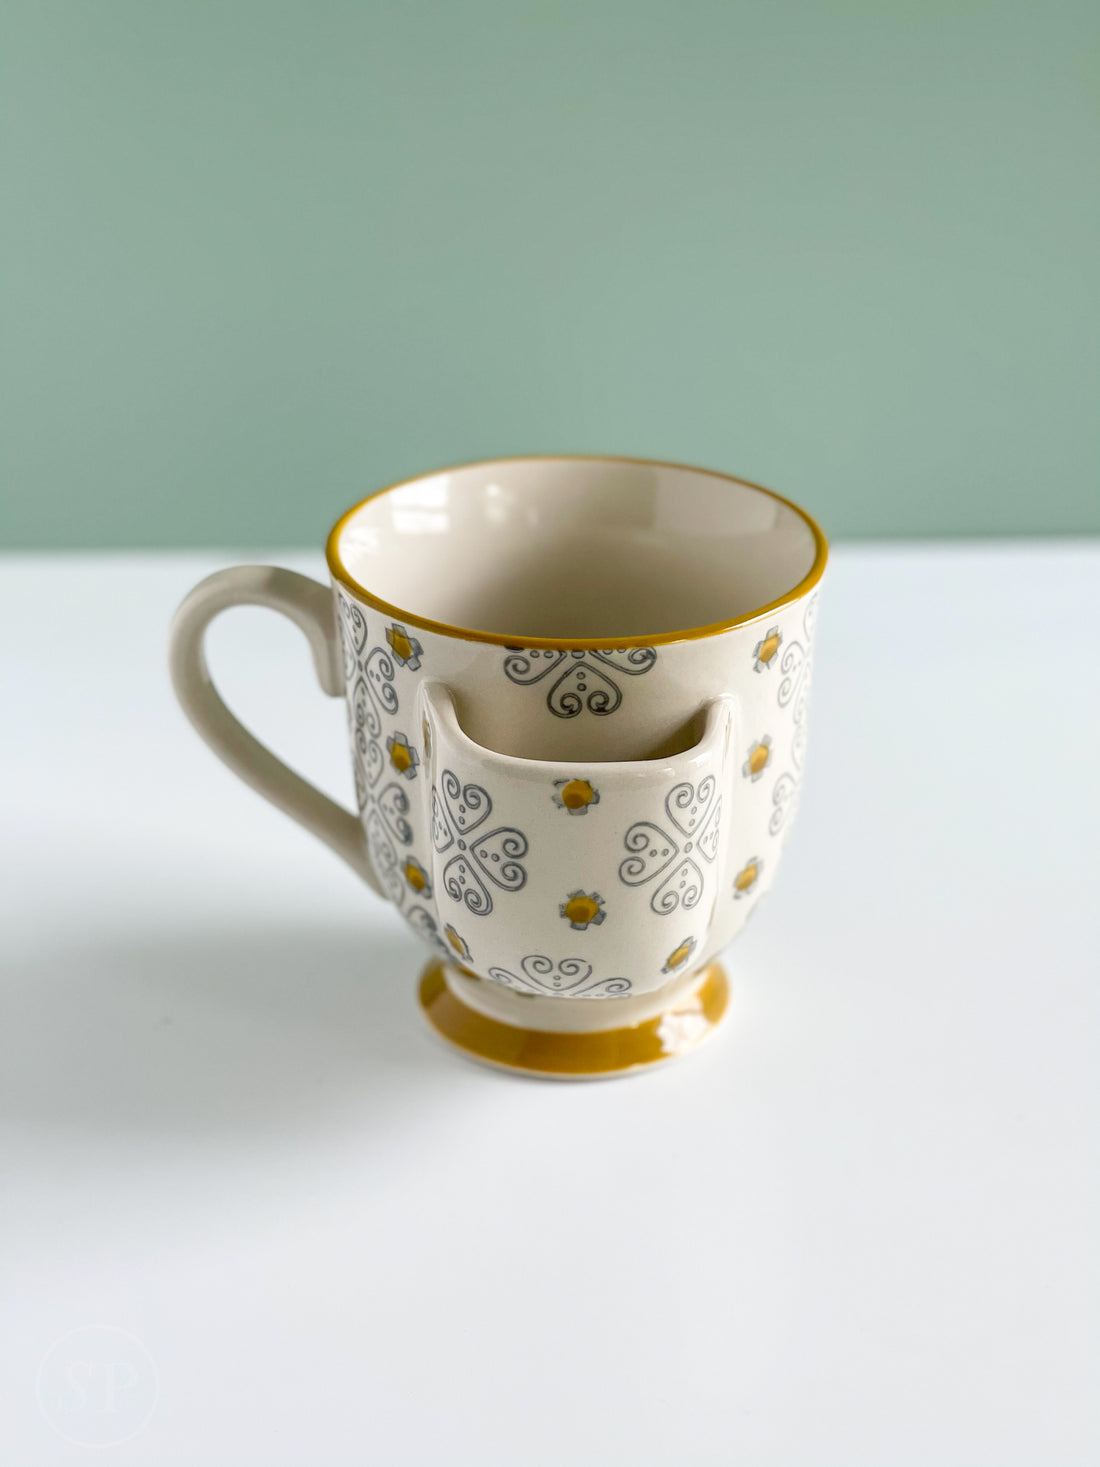 Vintage Tea Cup Mug With Tea Bag Holder 